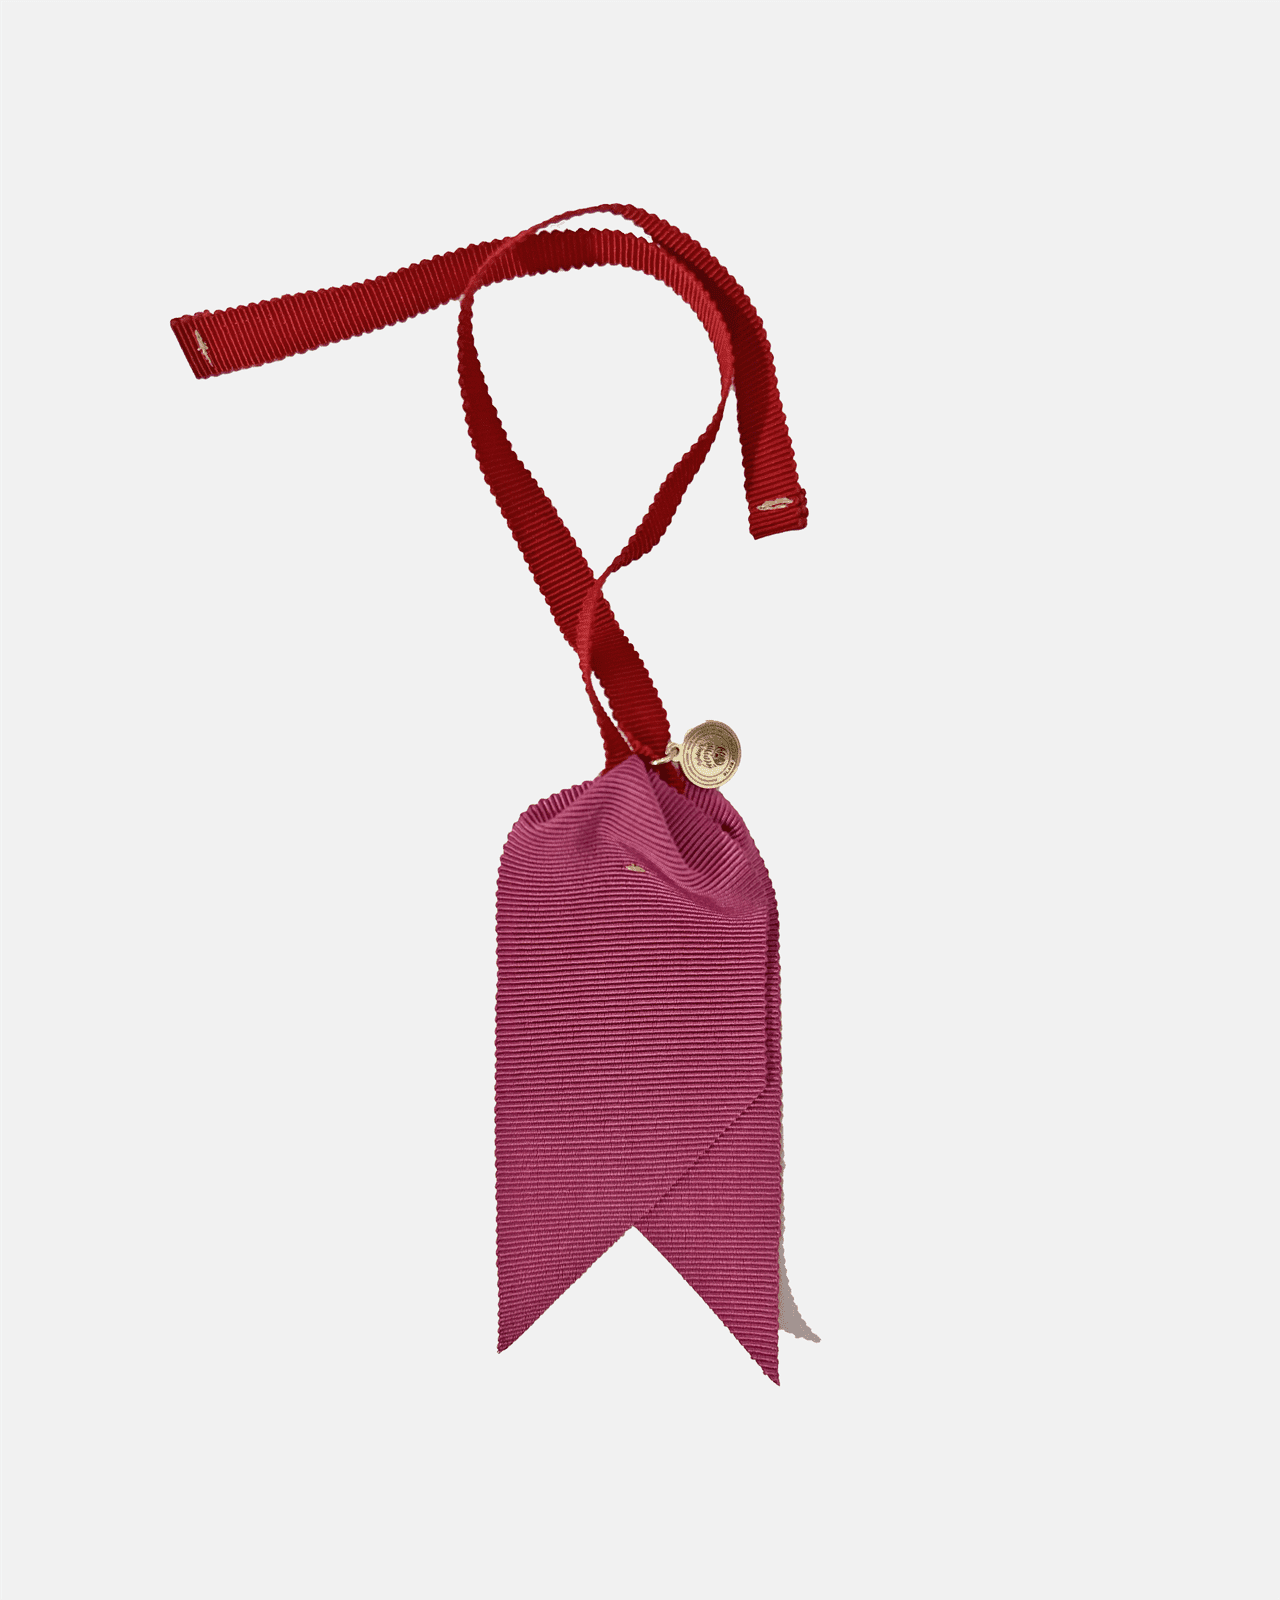 French Ribbon Tie | Fuchsia / Red Blair Ritchey